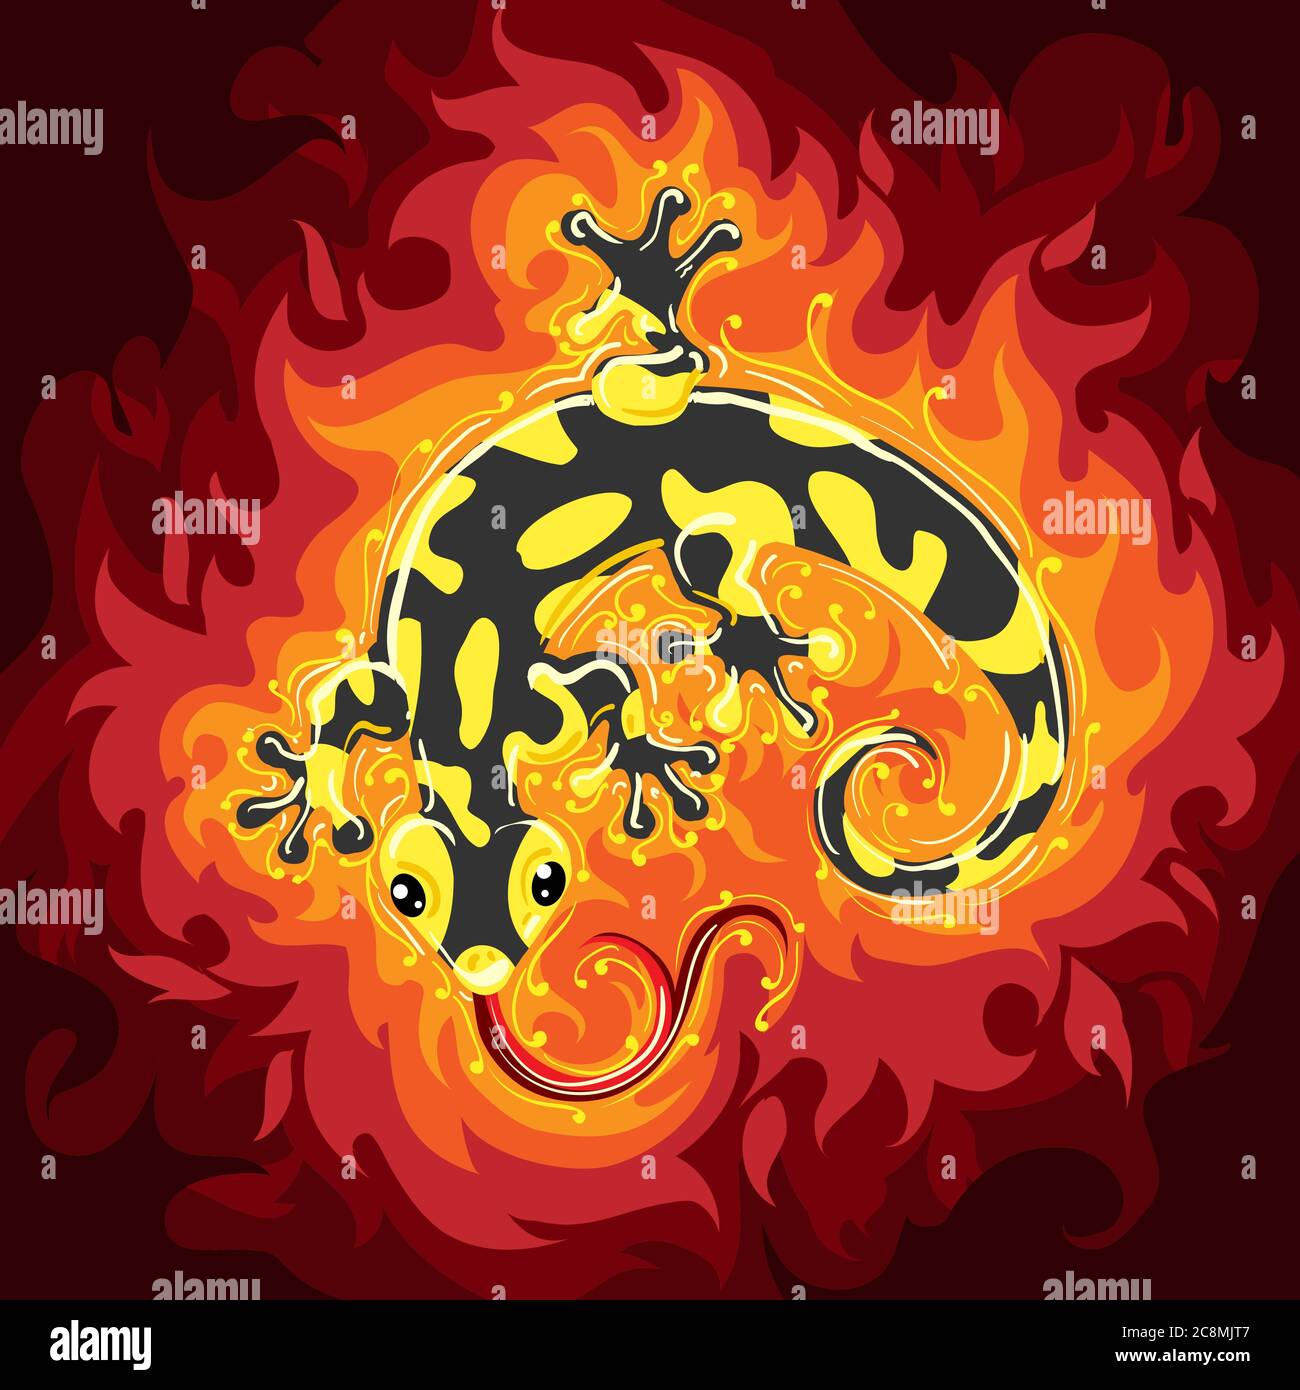 Fire Salamander on Flame background. Vector illustration. Stock Vector